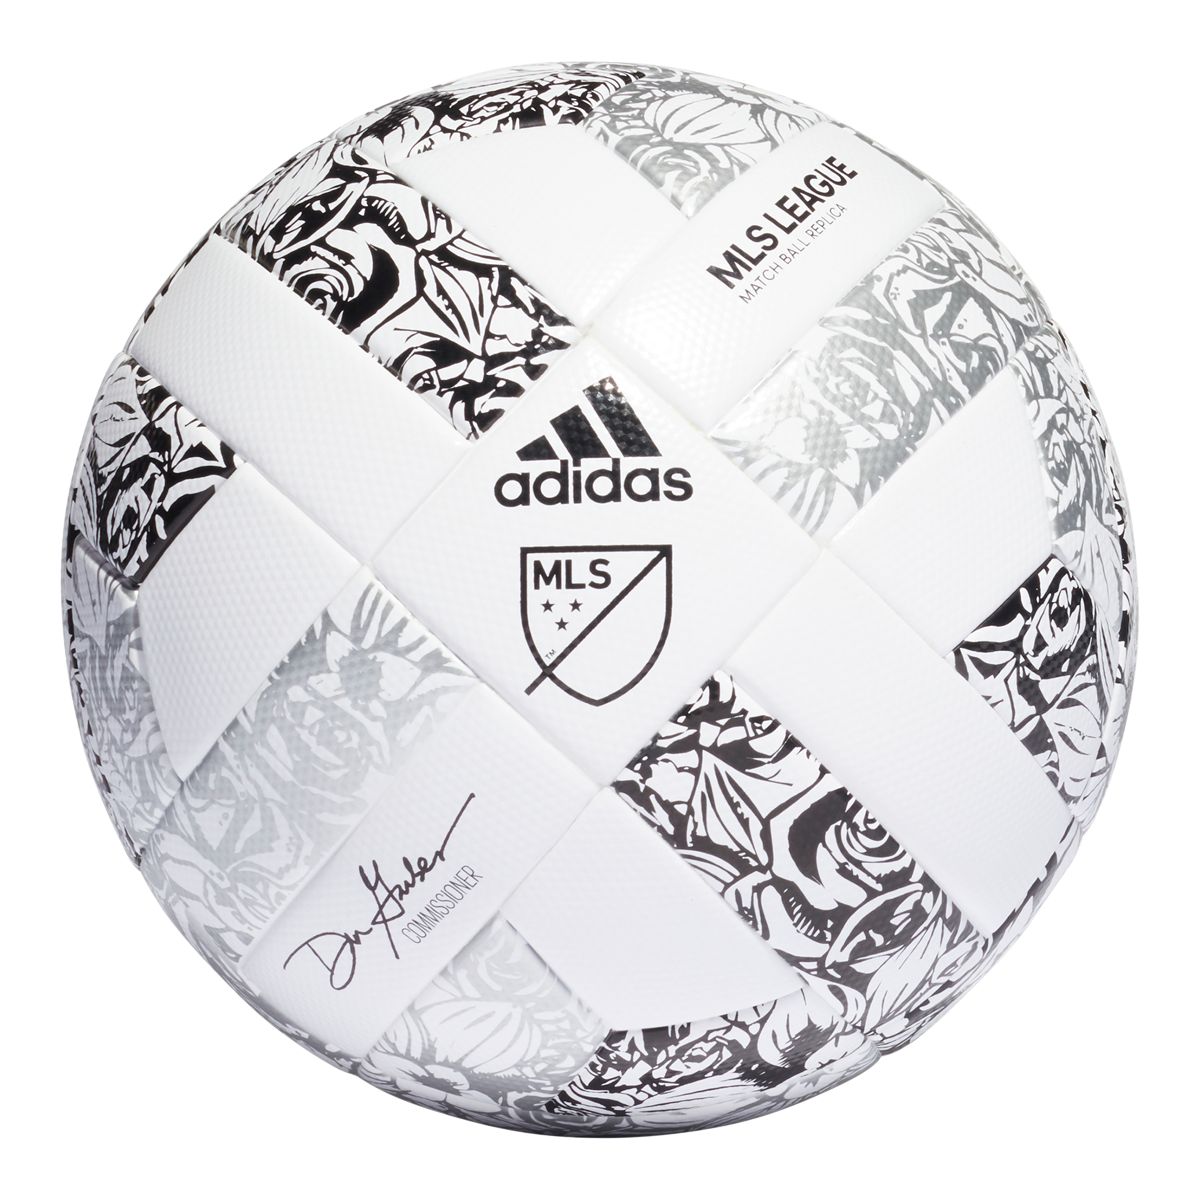 adidas MLS League Soccer Ball - Size 5